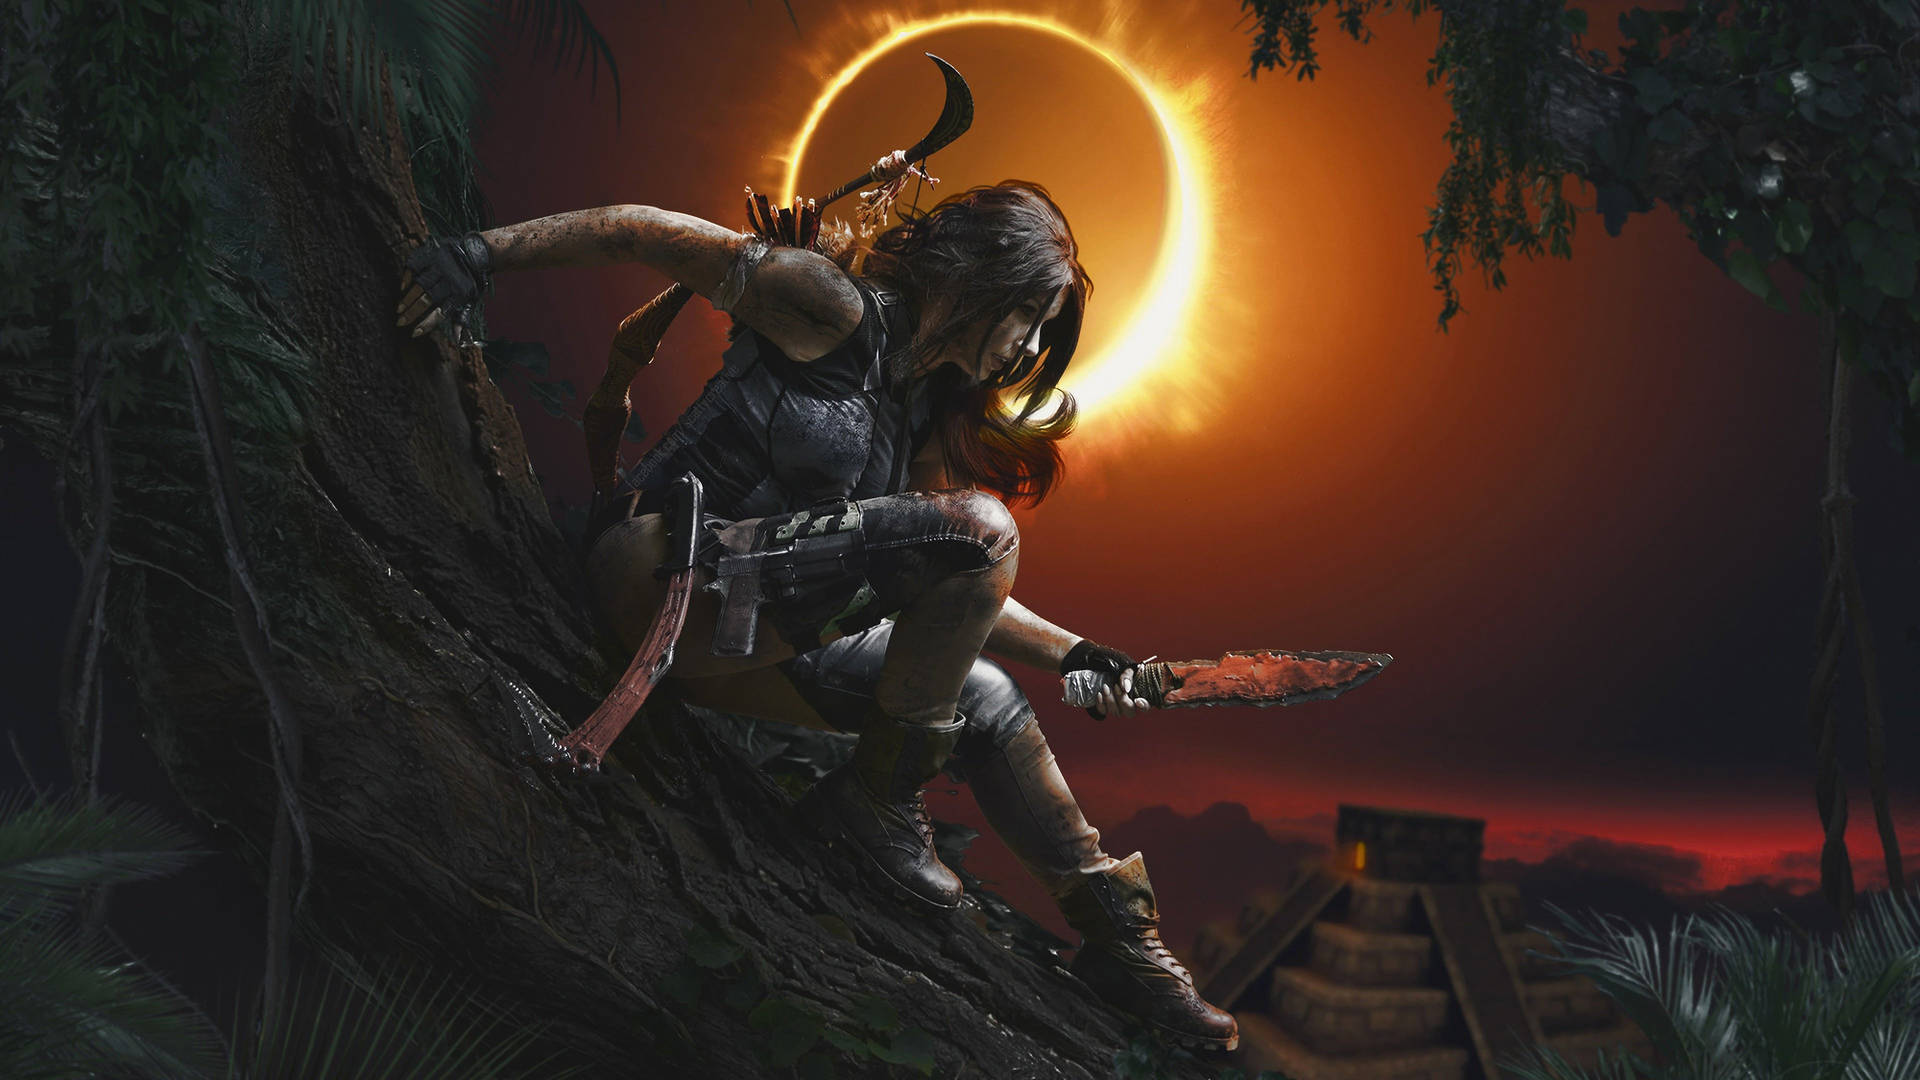 Laramit Messer Tomb Raider Spiel Wallpaper